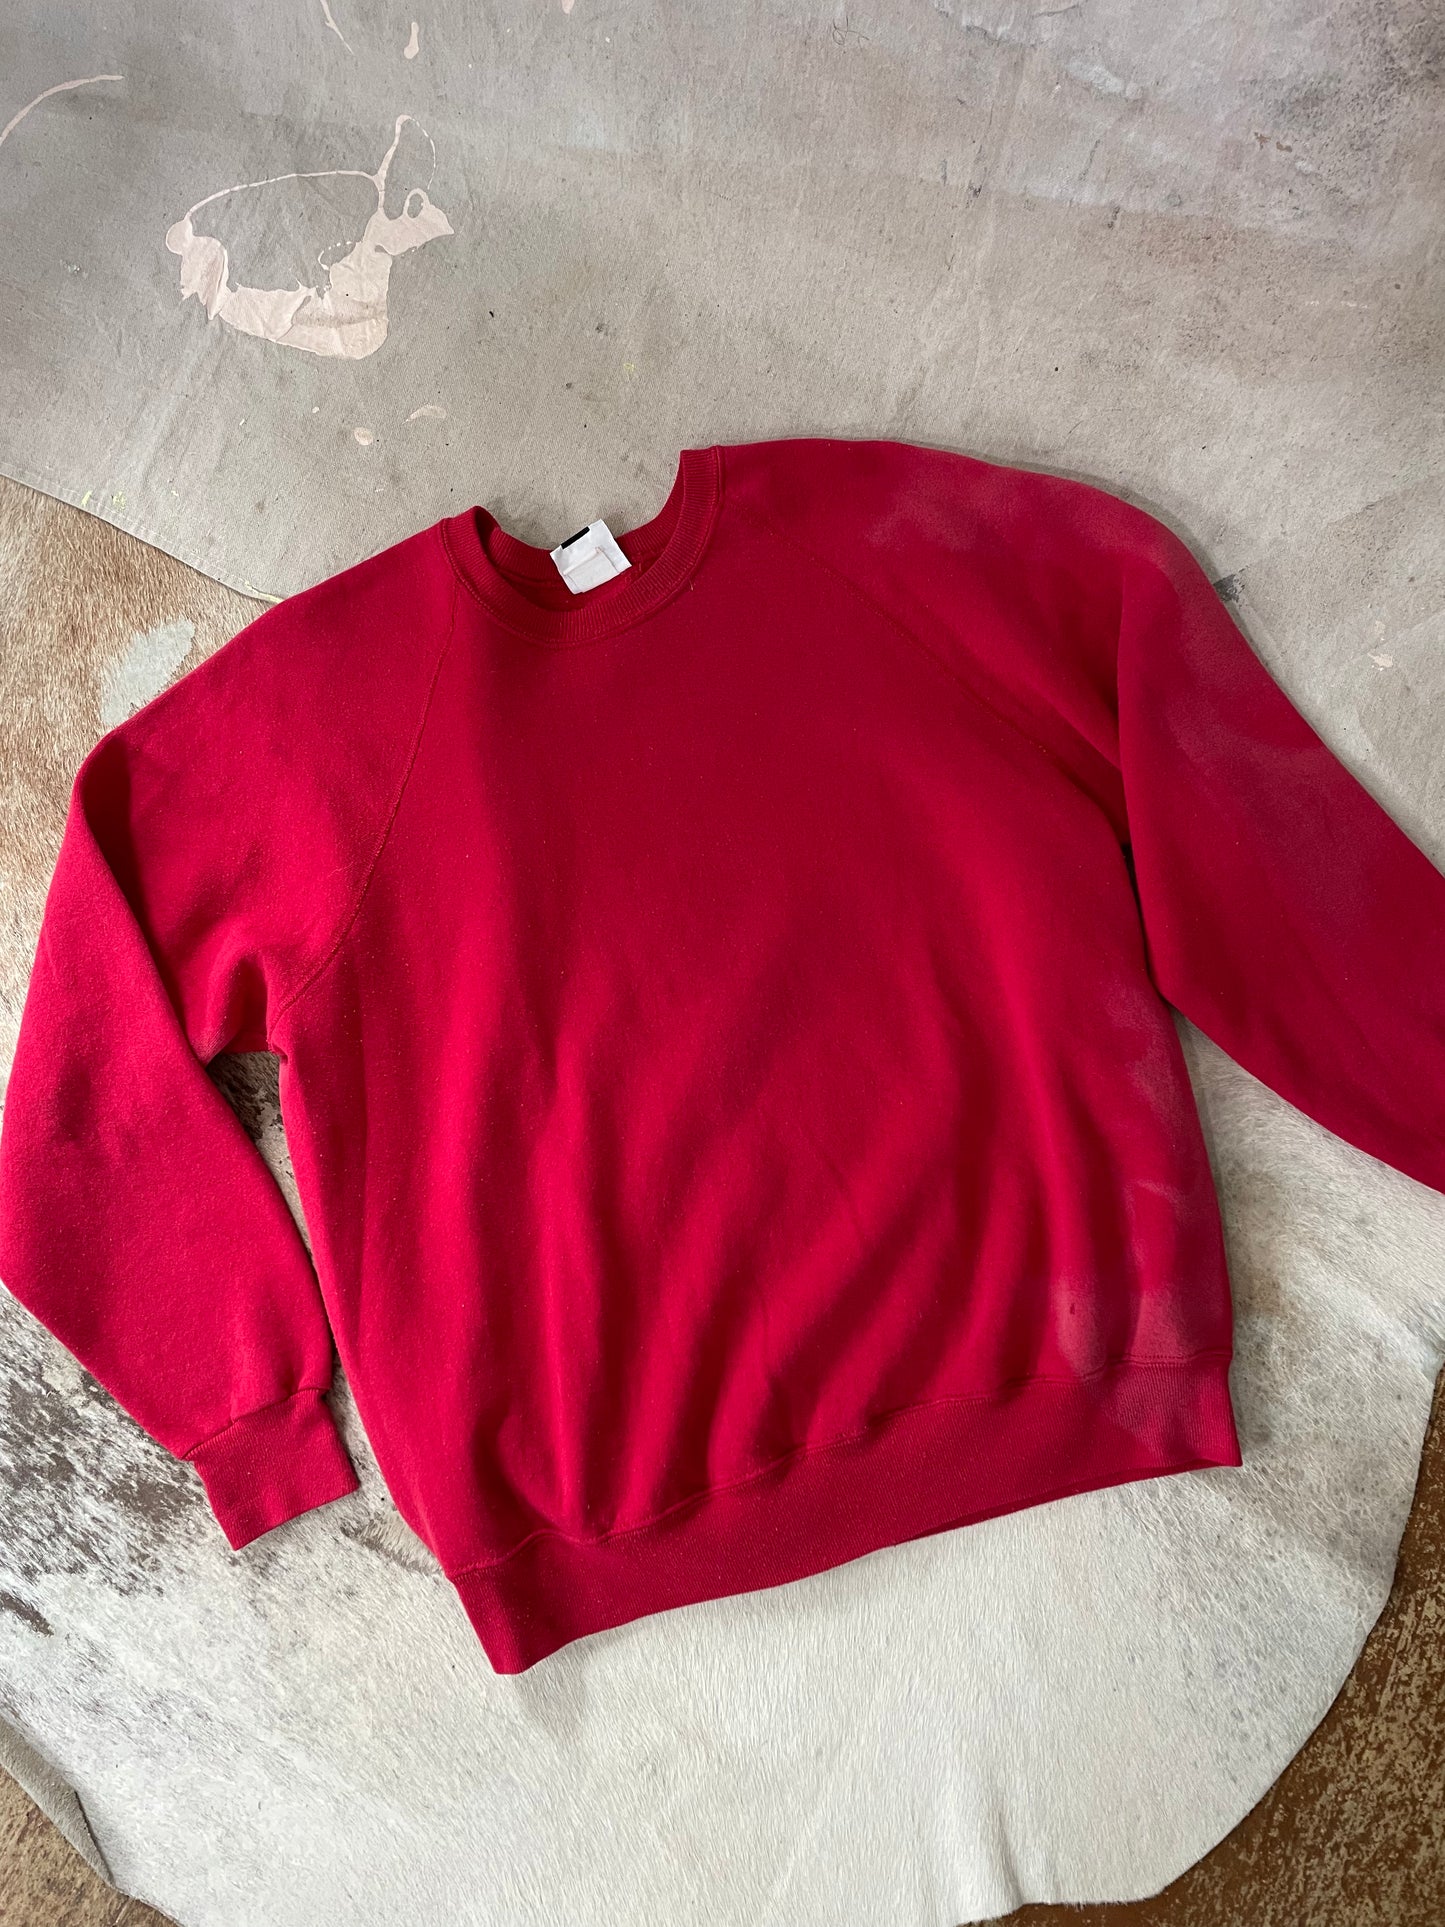 80s/90s Faded Raspberry Sweatshirt